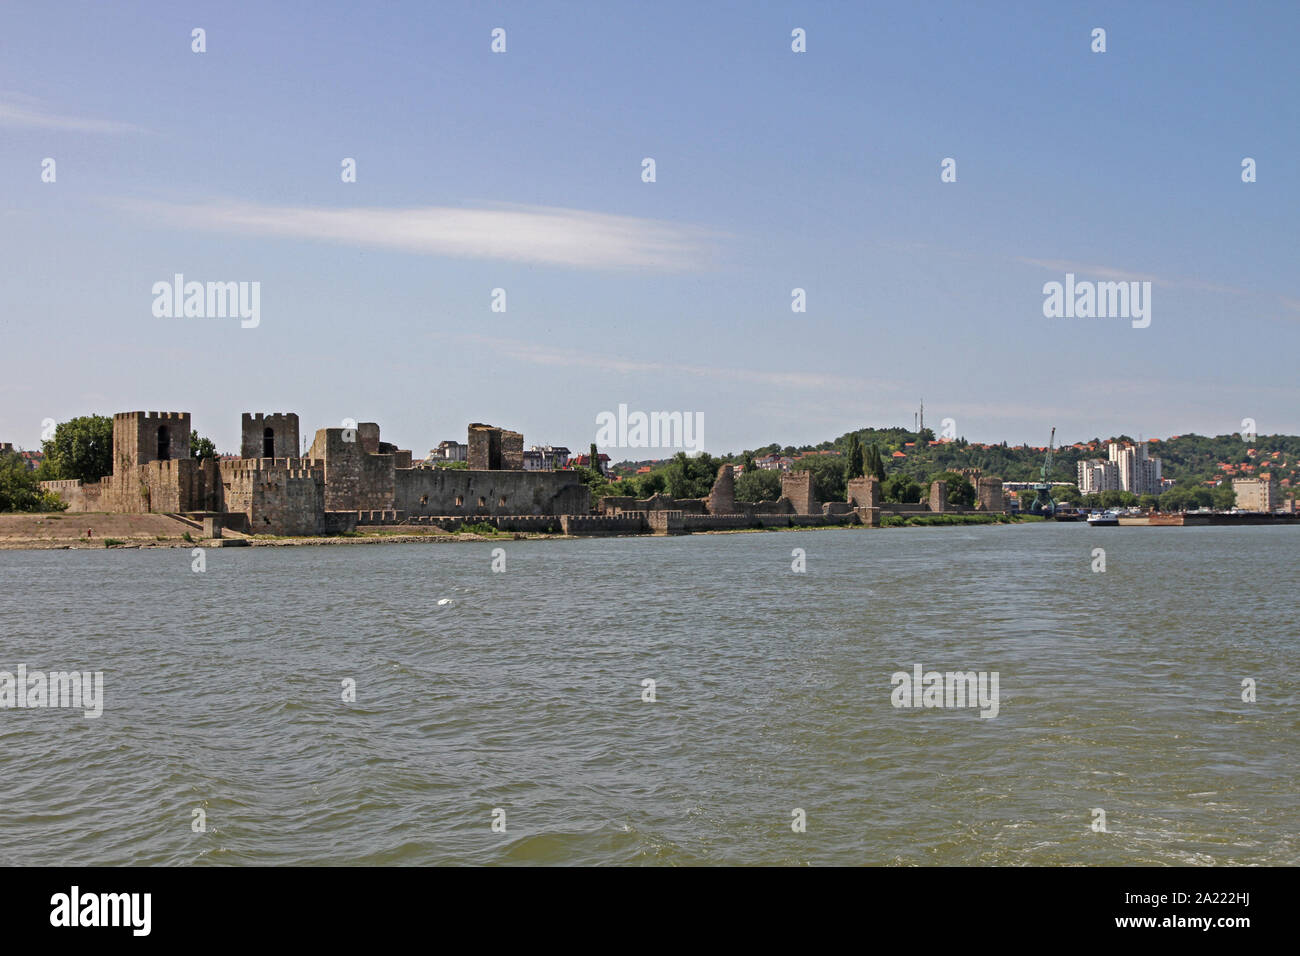 Smederevo Fortress on the bank of the Danube River, Smederevo, Serbia. Stock Photo